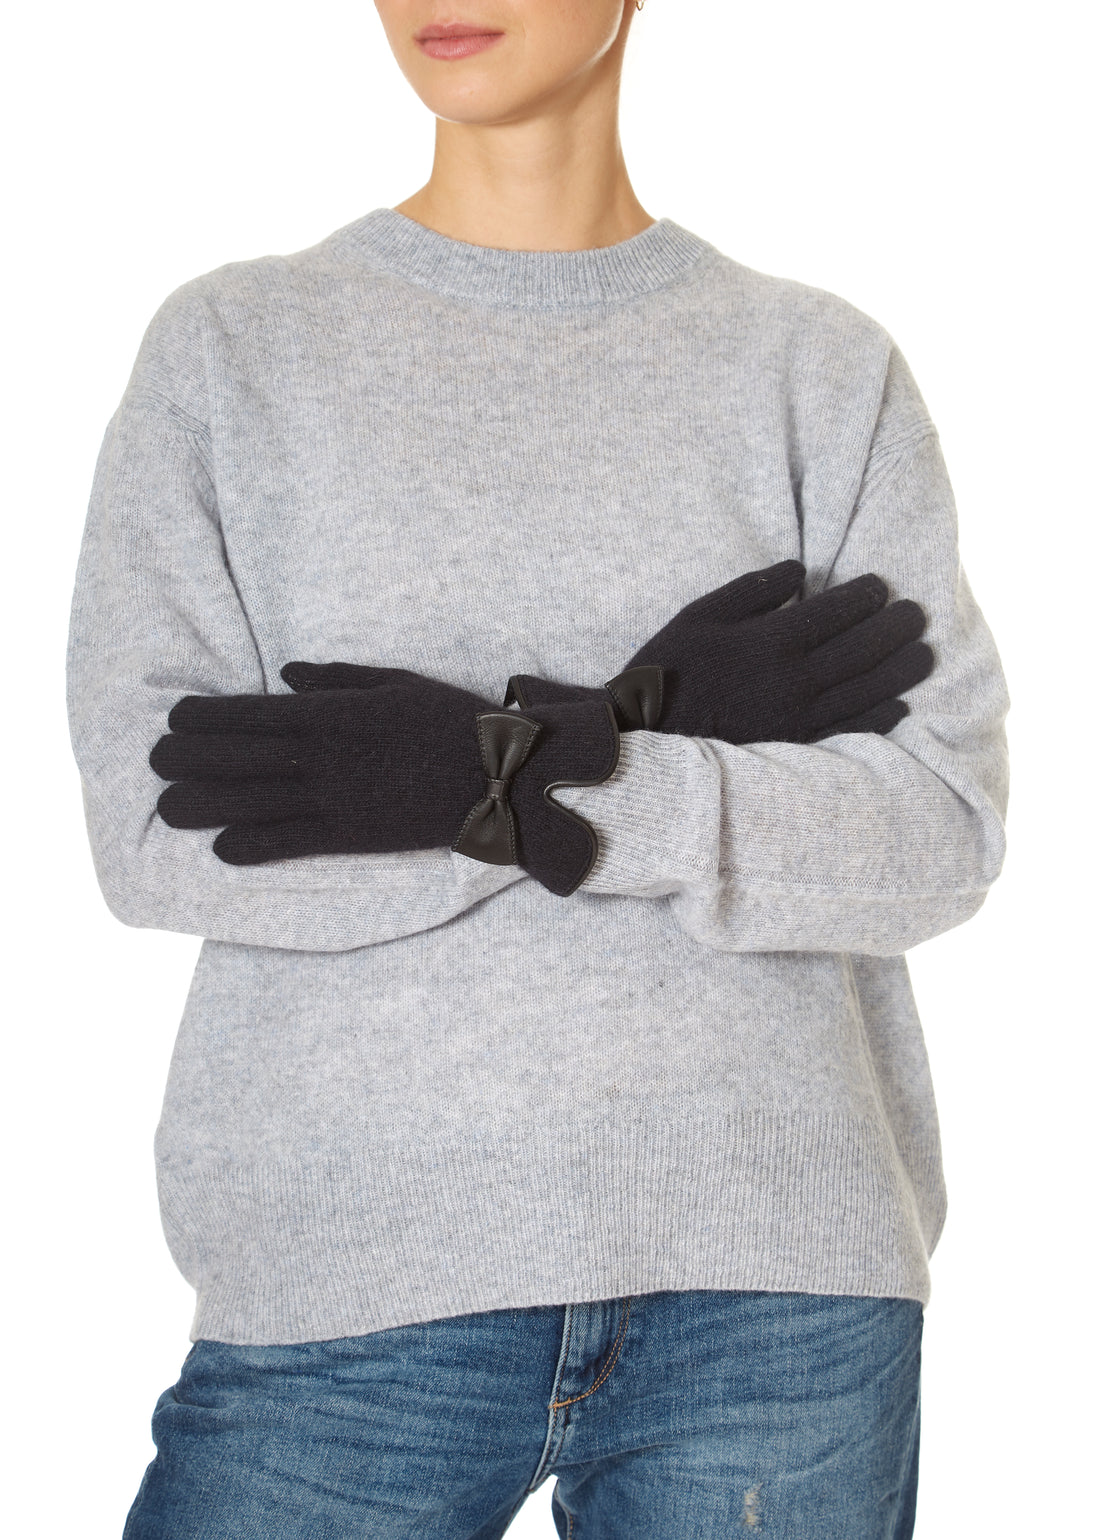 Santacana Black Bow Gloves 'Wool Blend' - Jessimara